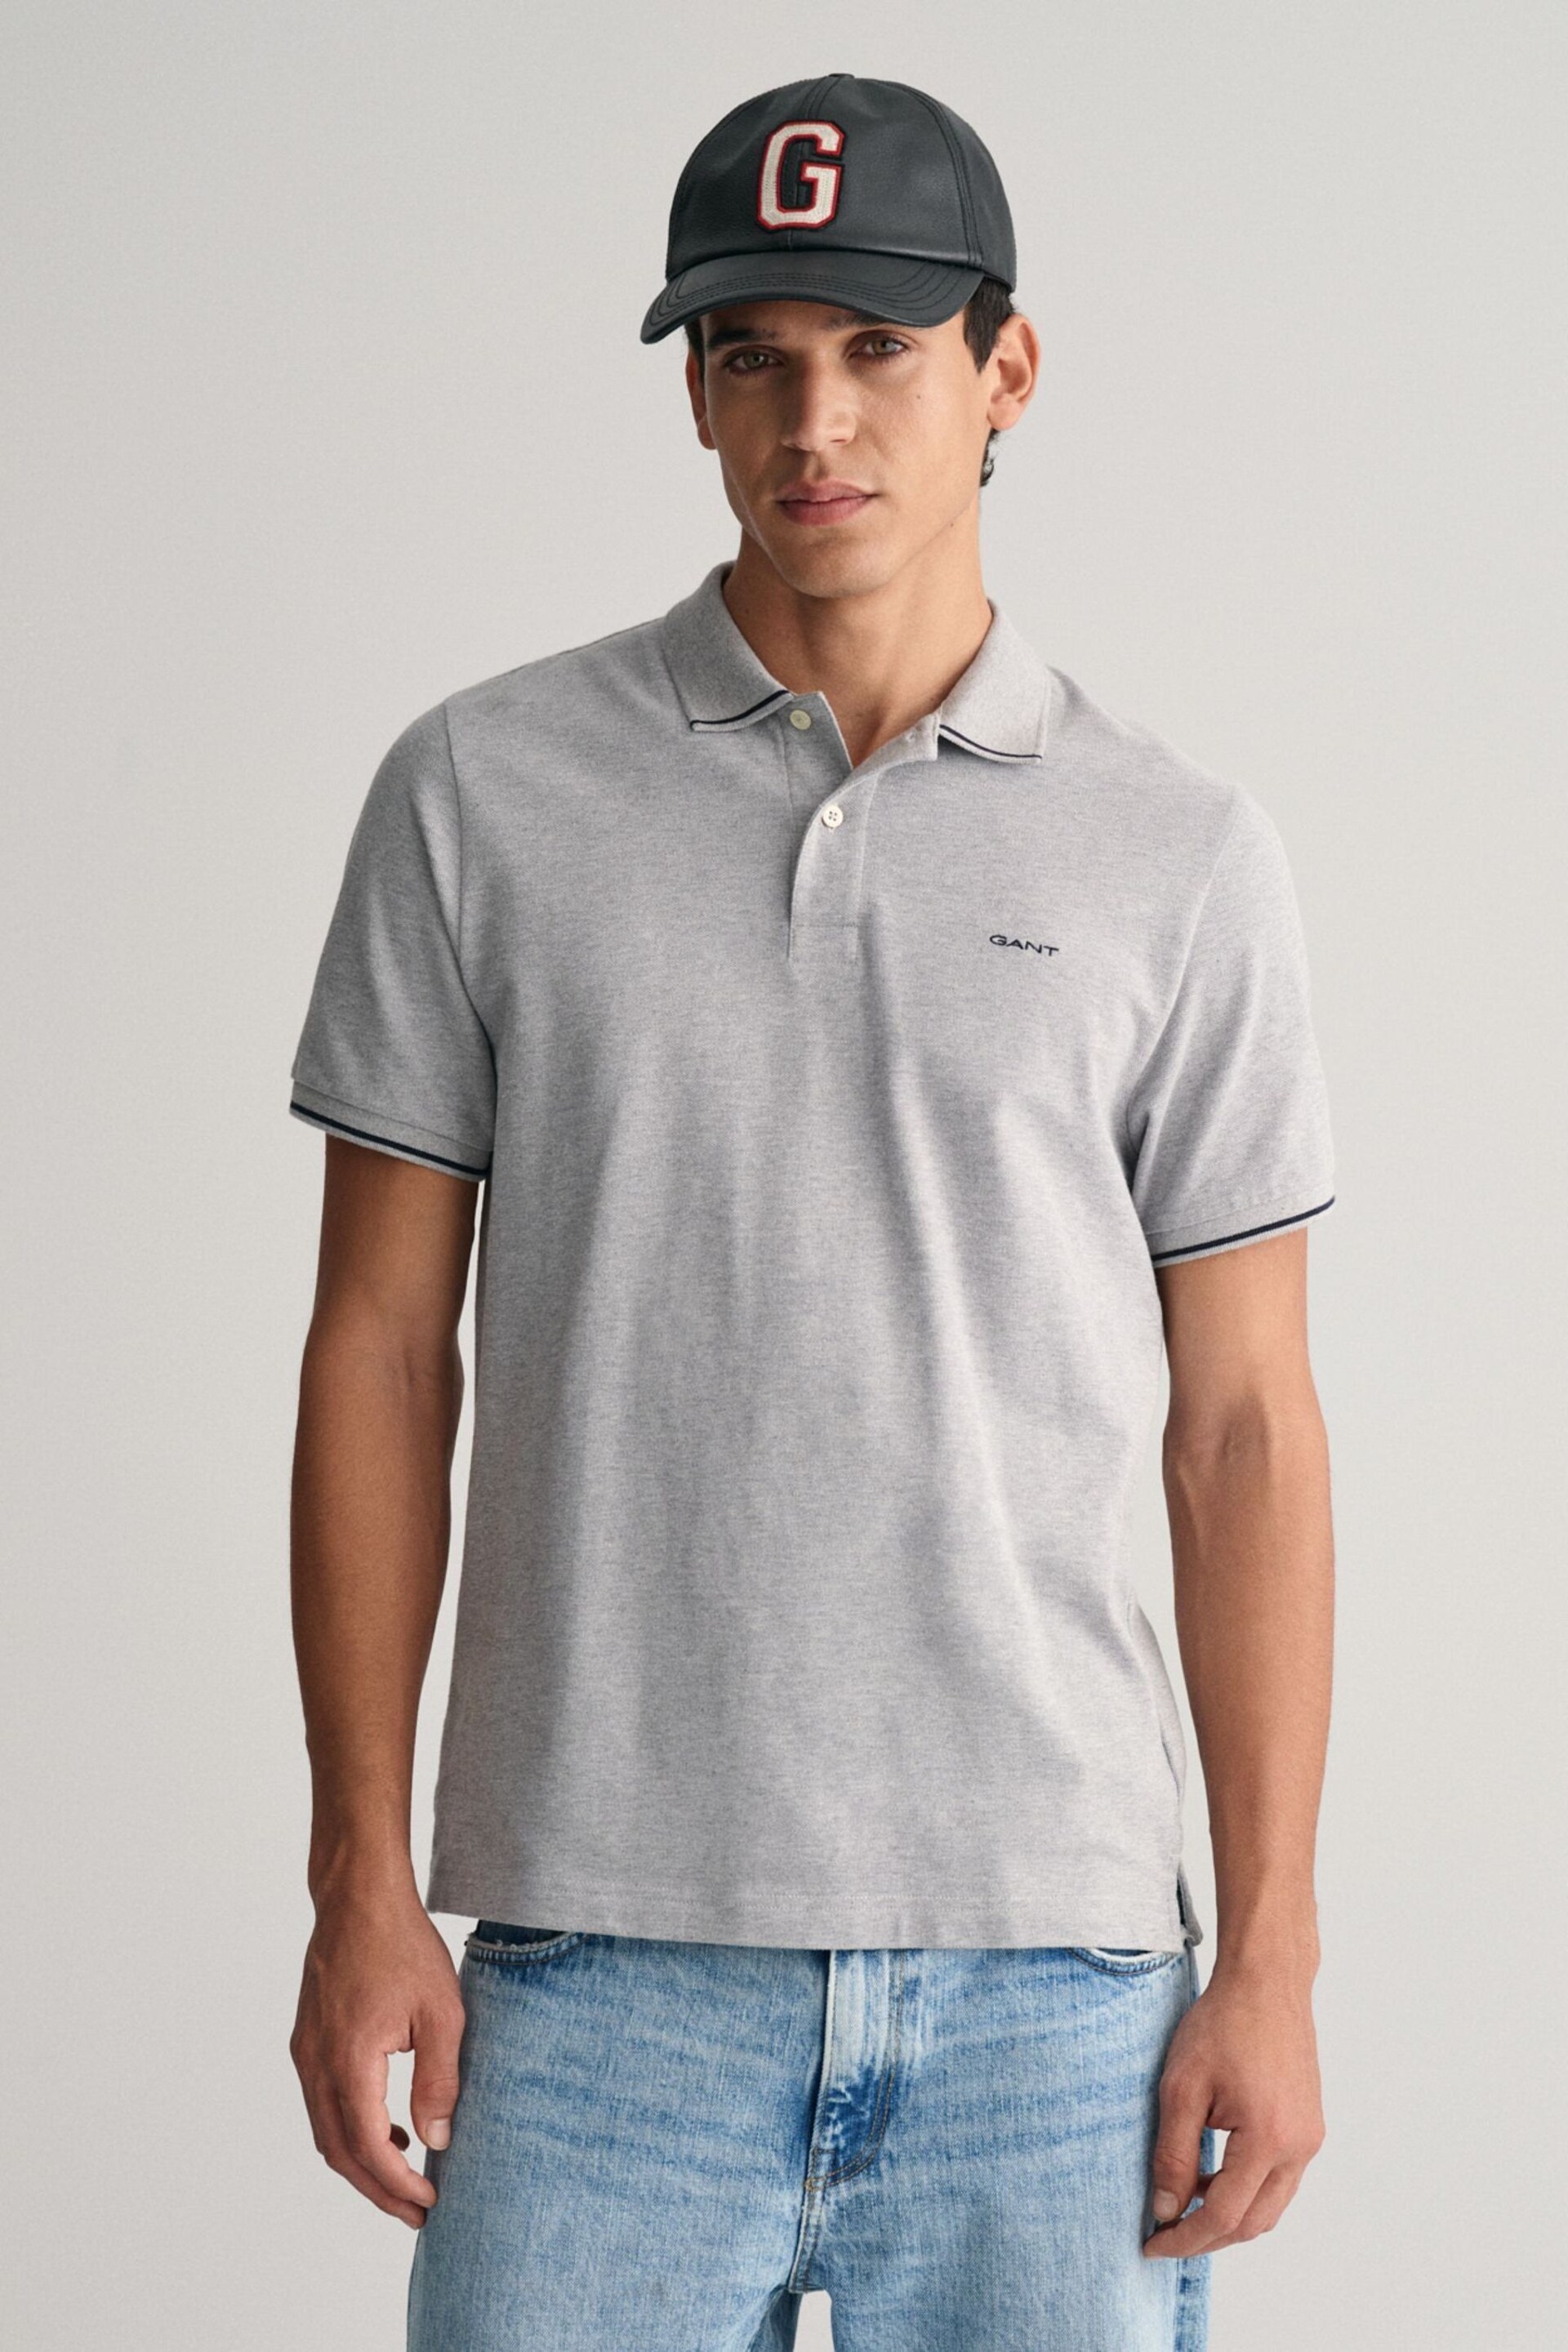 GANT Tipped Piqué Polo Shirt - Image 1 of 5